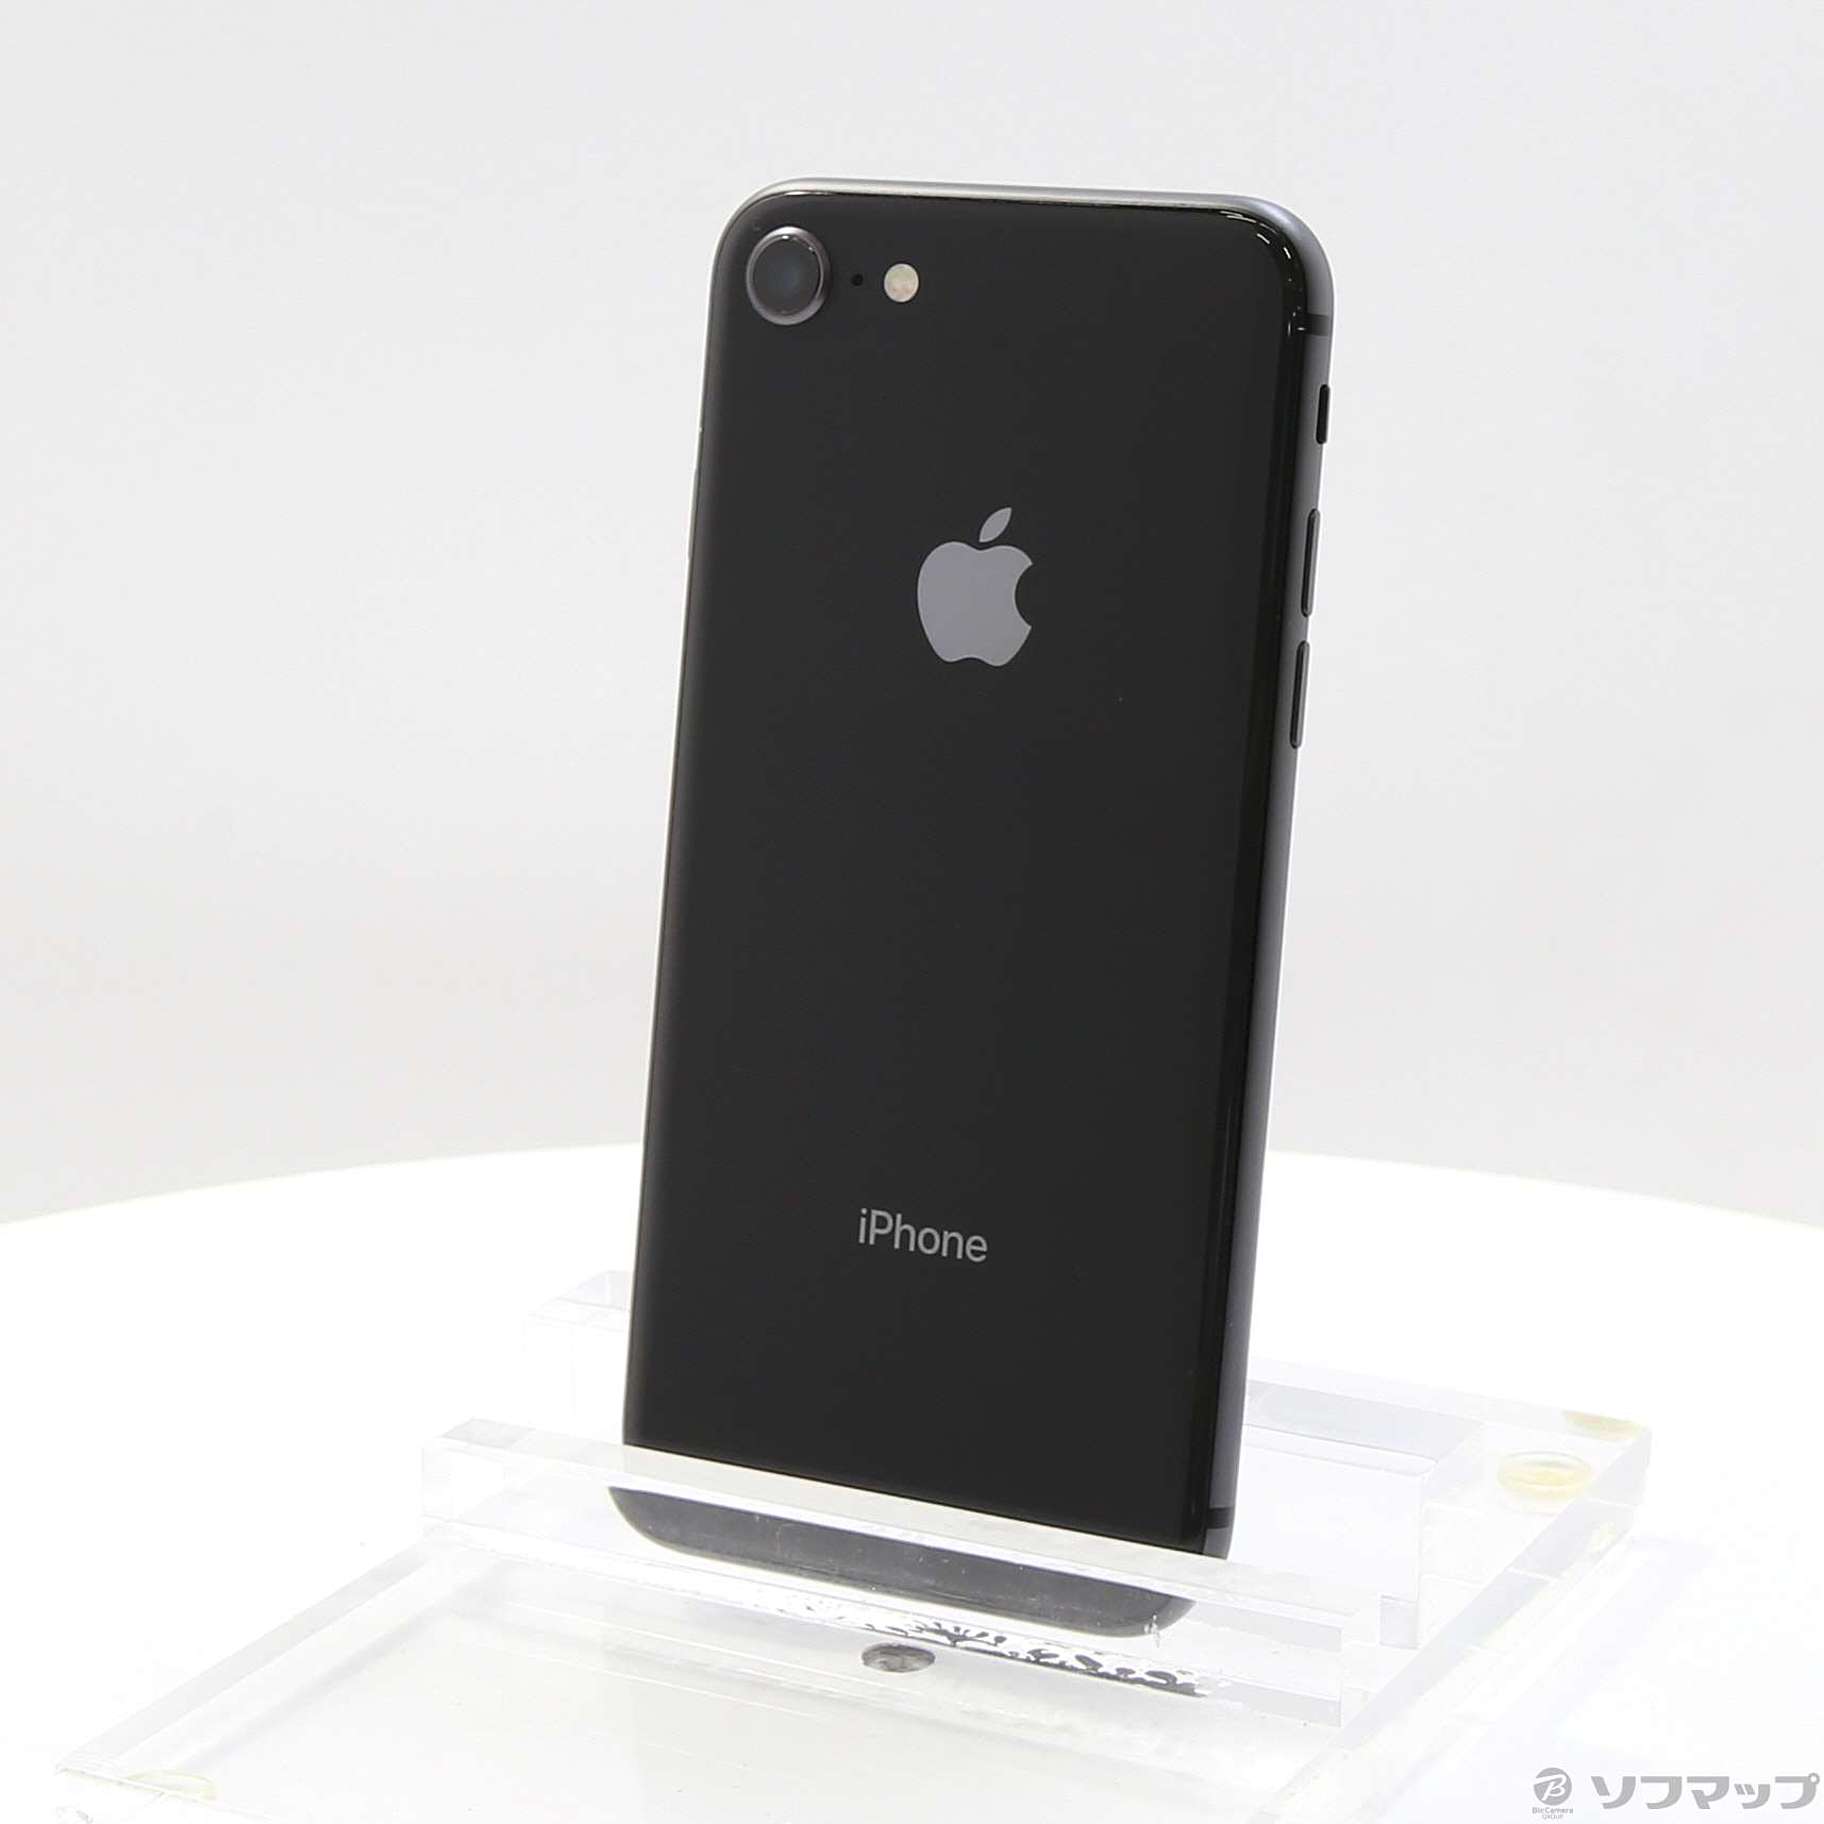 iPhone 8 Space Gray 64 GB Softbank - スマートフォン本体